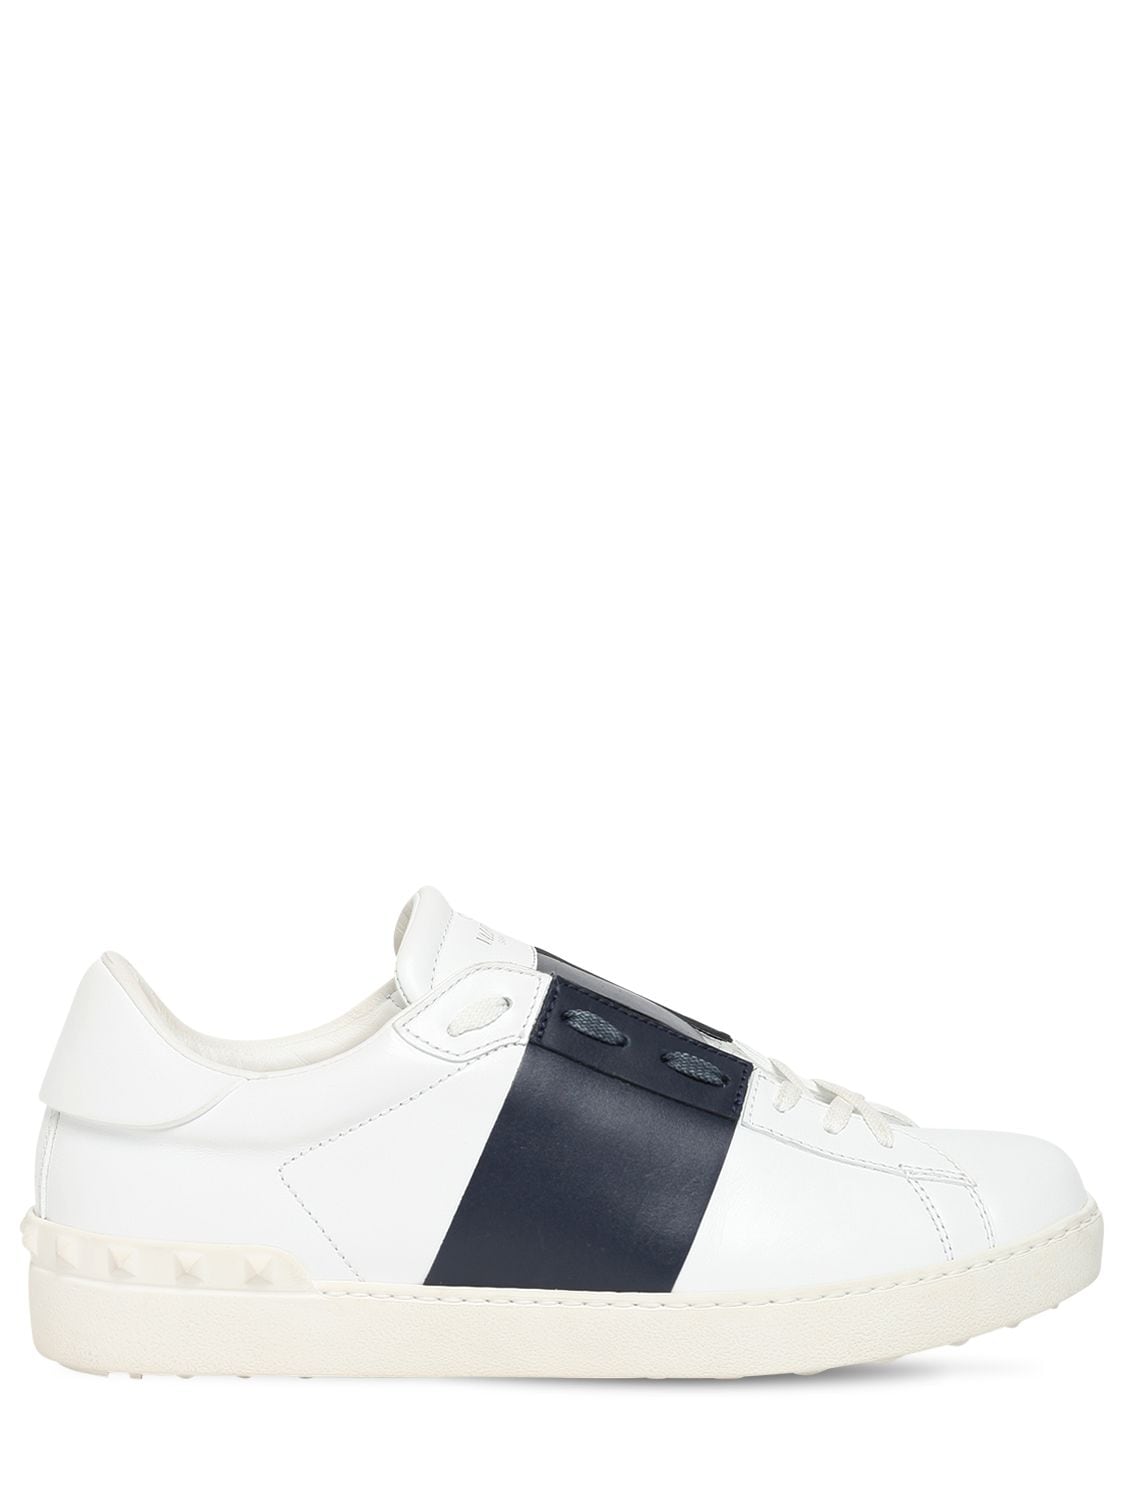 Valentino Garavani Open Color Block Leather Sneakers In White,navy